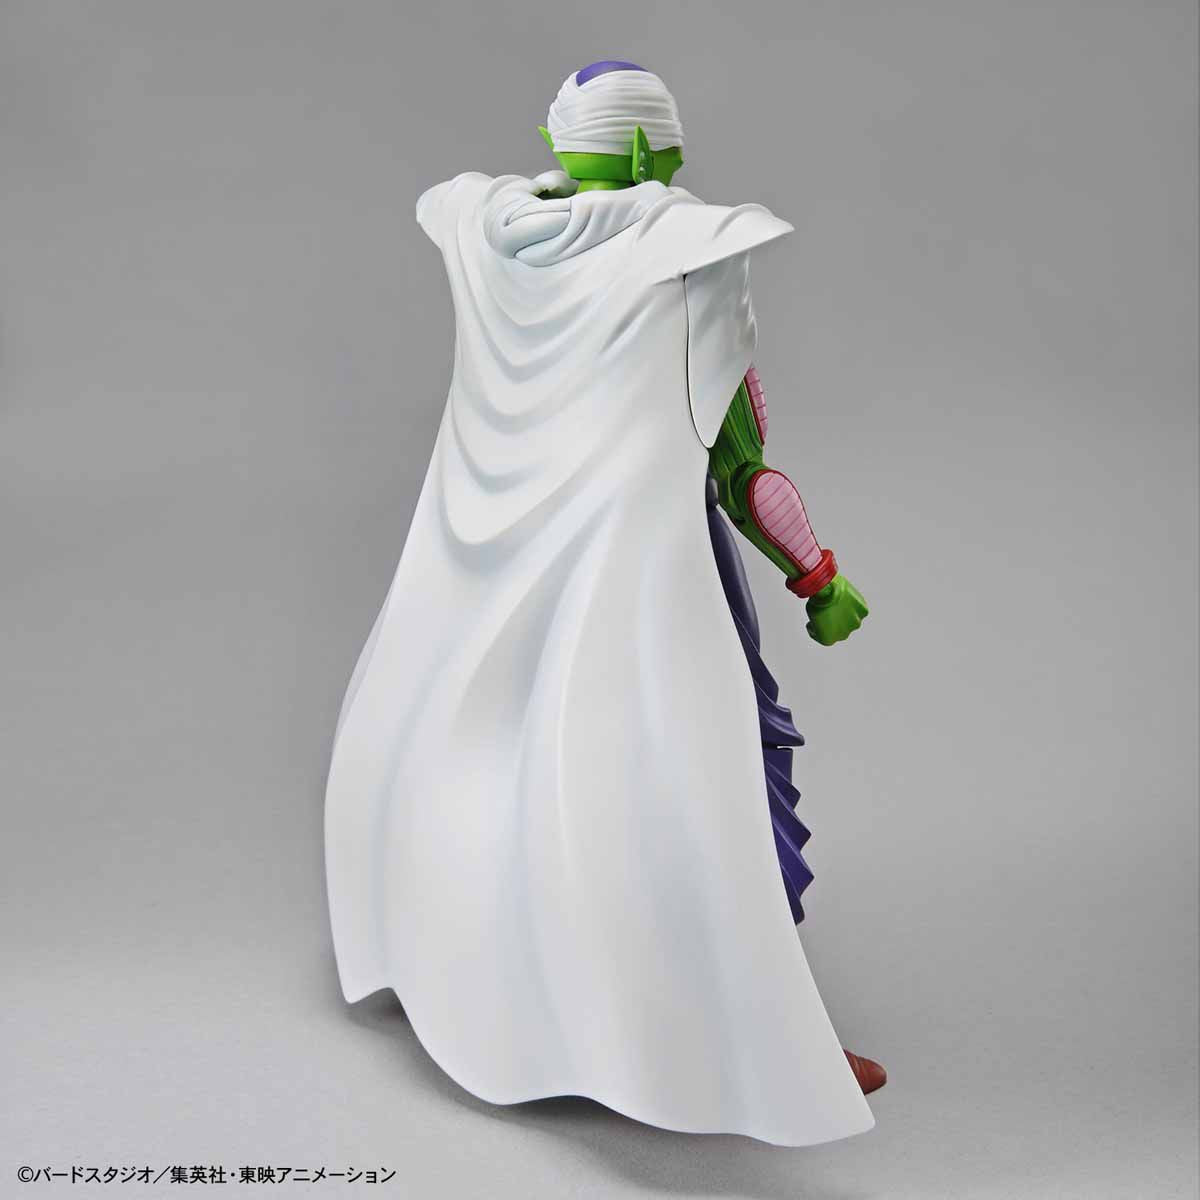 Piccolo Figure-rise Standard - Dragon Ball Z Bandai | Glacier Hobbies